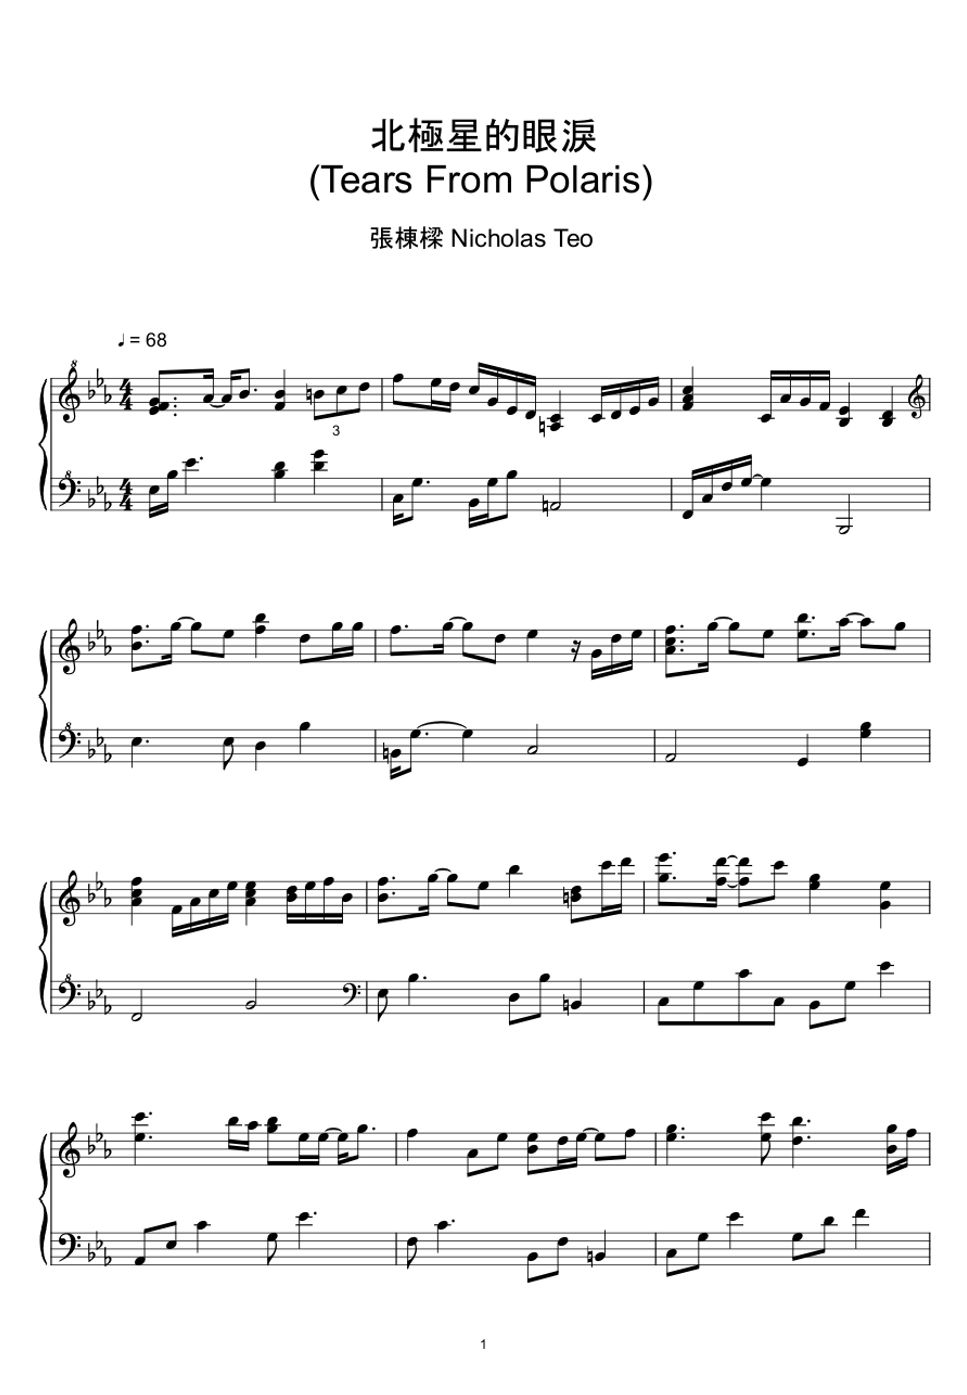 張棟樑 (Nicholas Teo) - 北極星的眼淚 (Tears From Polaris) (Sheet Music, MIDI,) by sayu